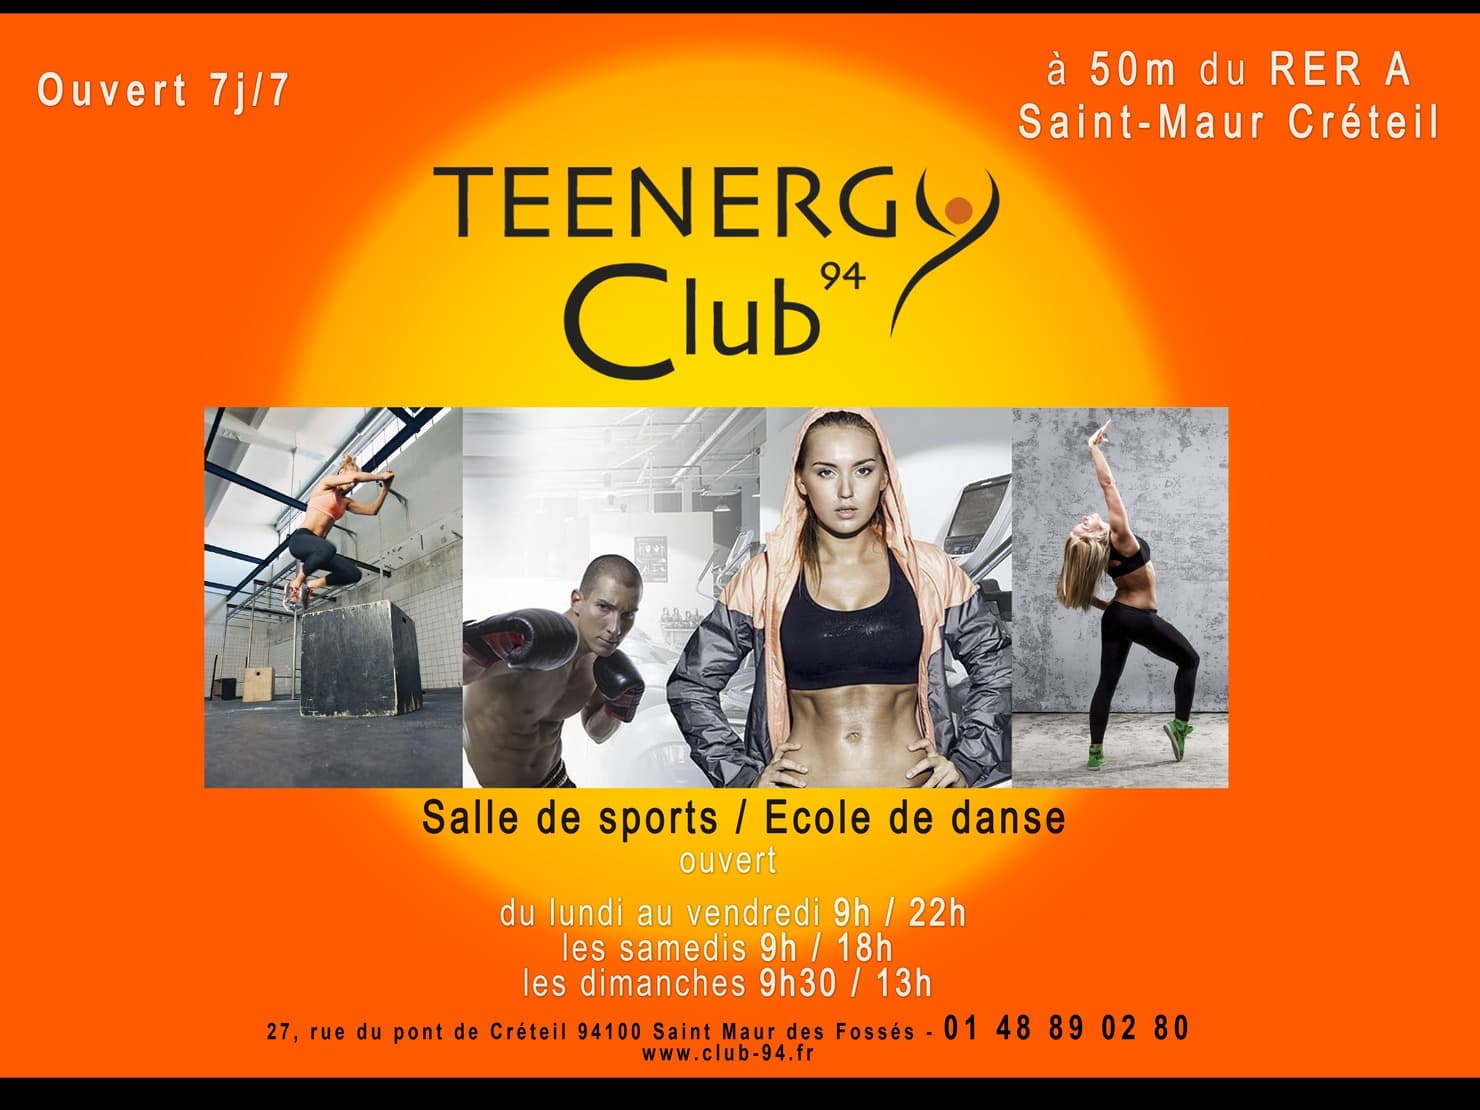 Teenergy Club 94